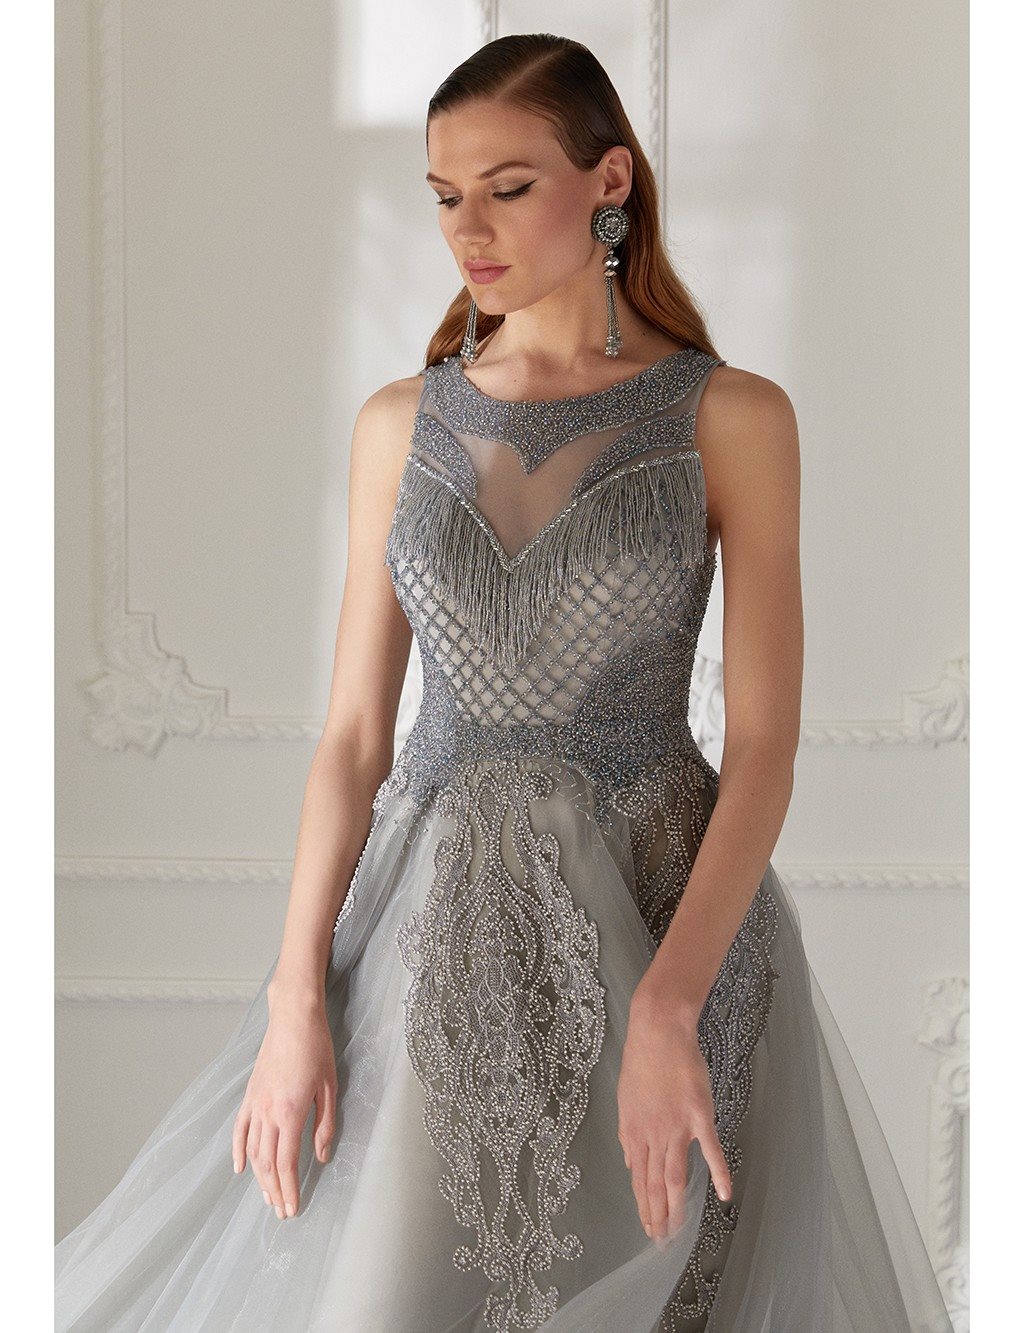 TIARA Tasseled, Embroidered Evening Dress B9 26096 Blue Granite